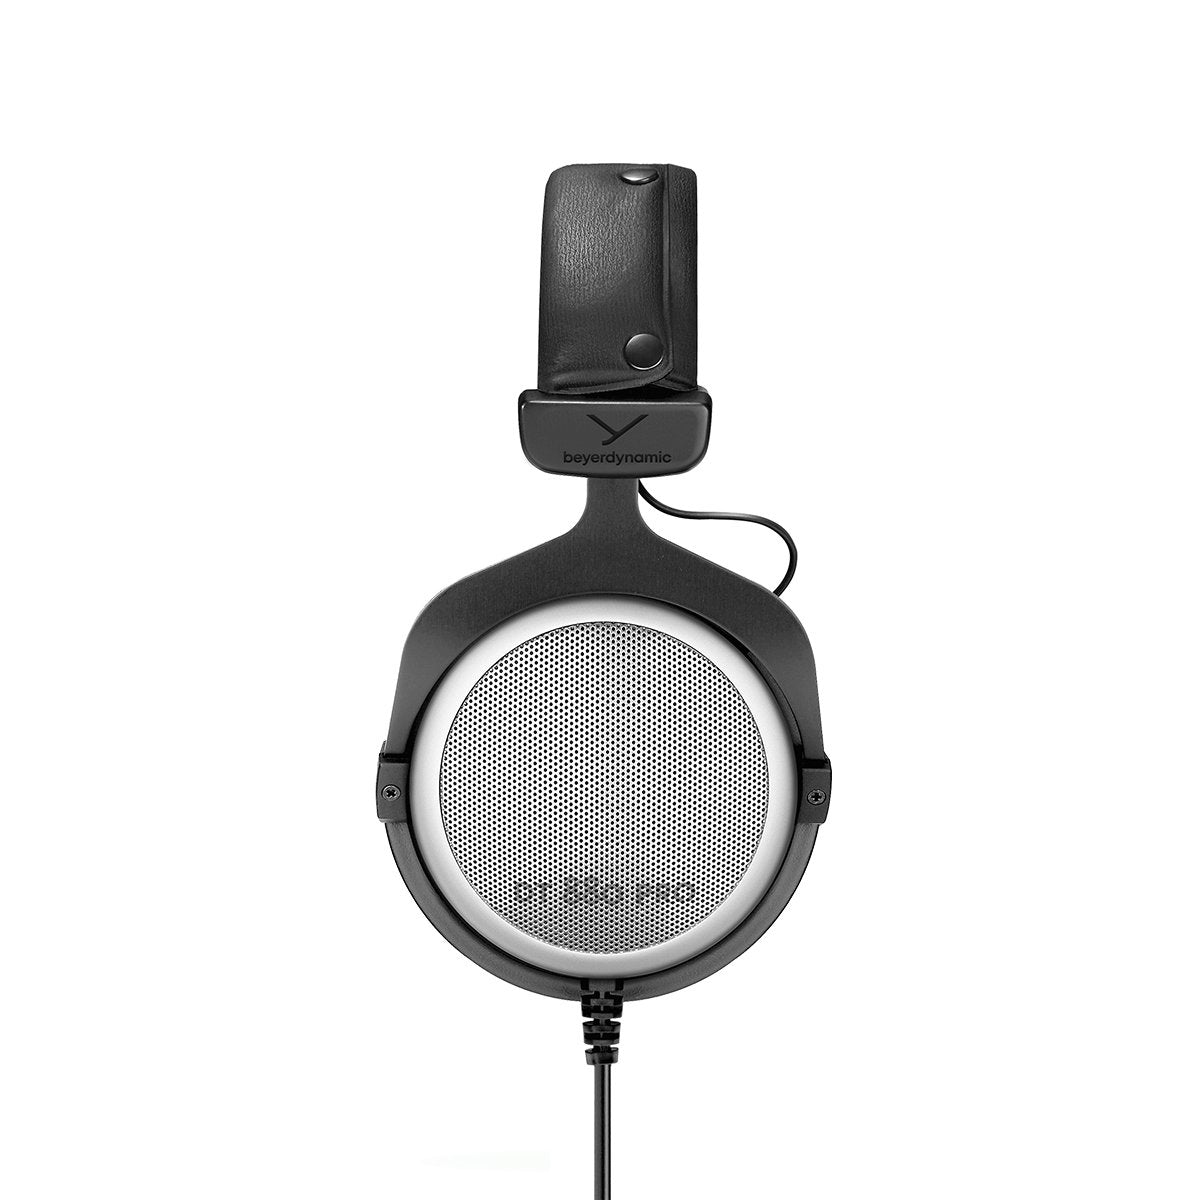 Beyerdynamic DT 880 PRO 250 Ohms Studio Headphones For Mixing And Mastering (Semi-Open)